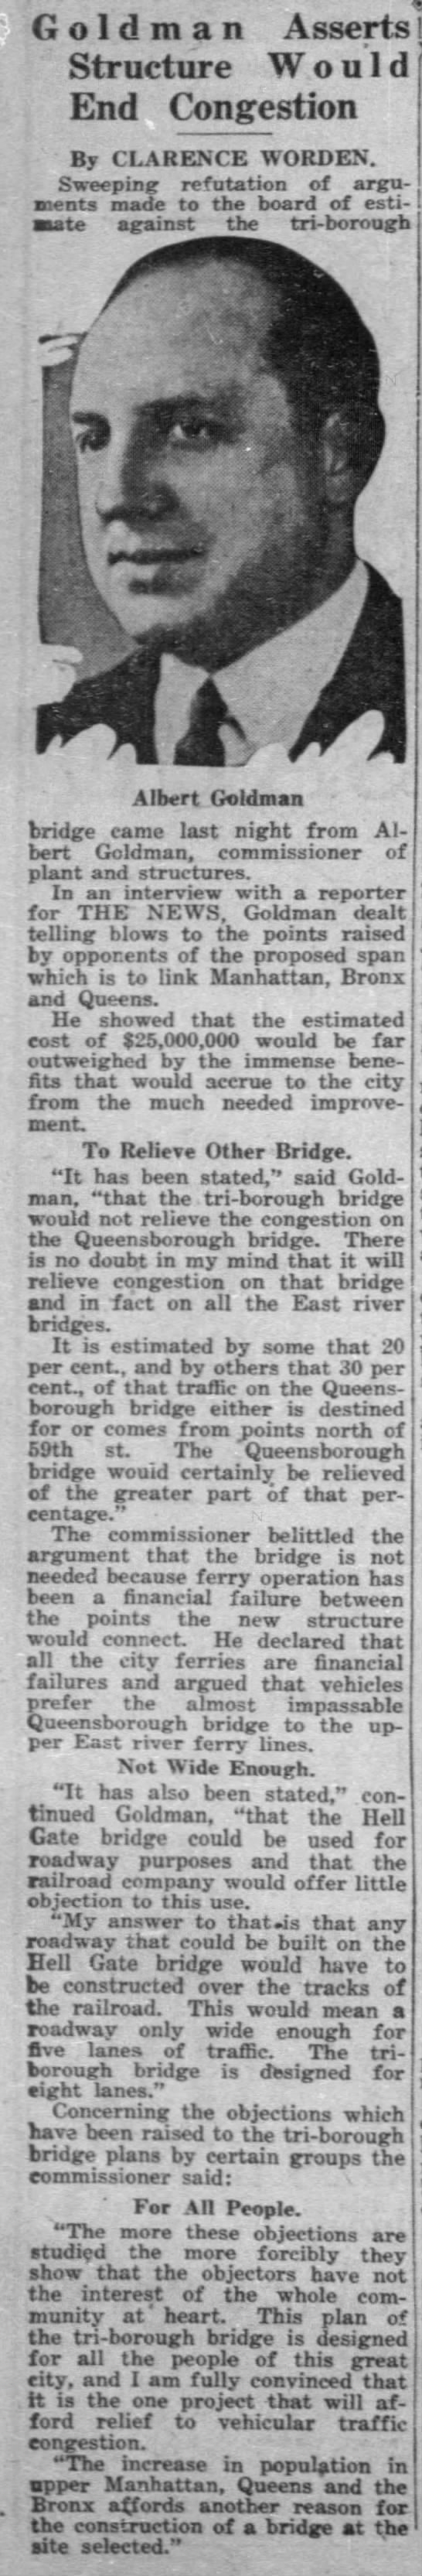 Triborough Bridge Objections Refuted - 